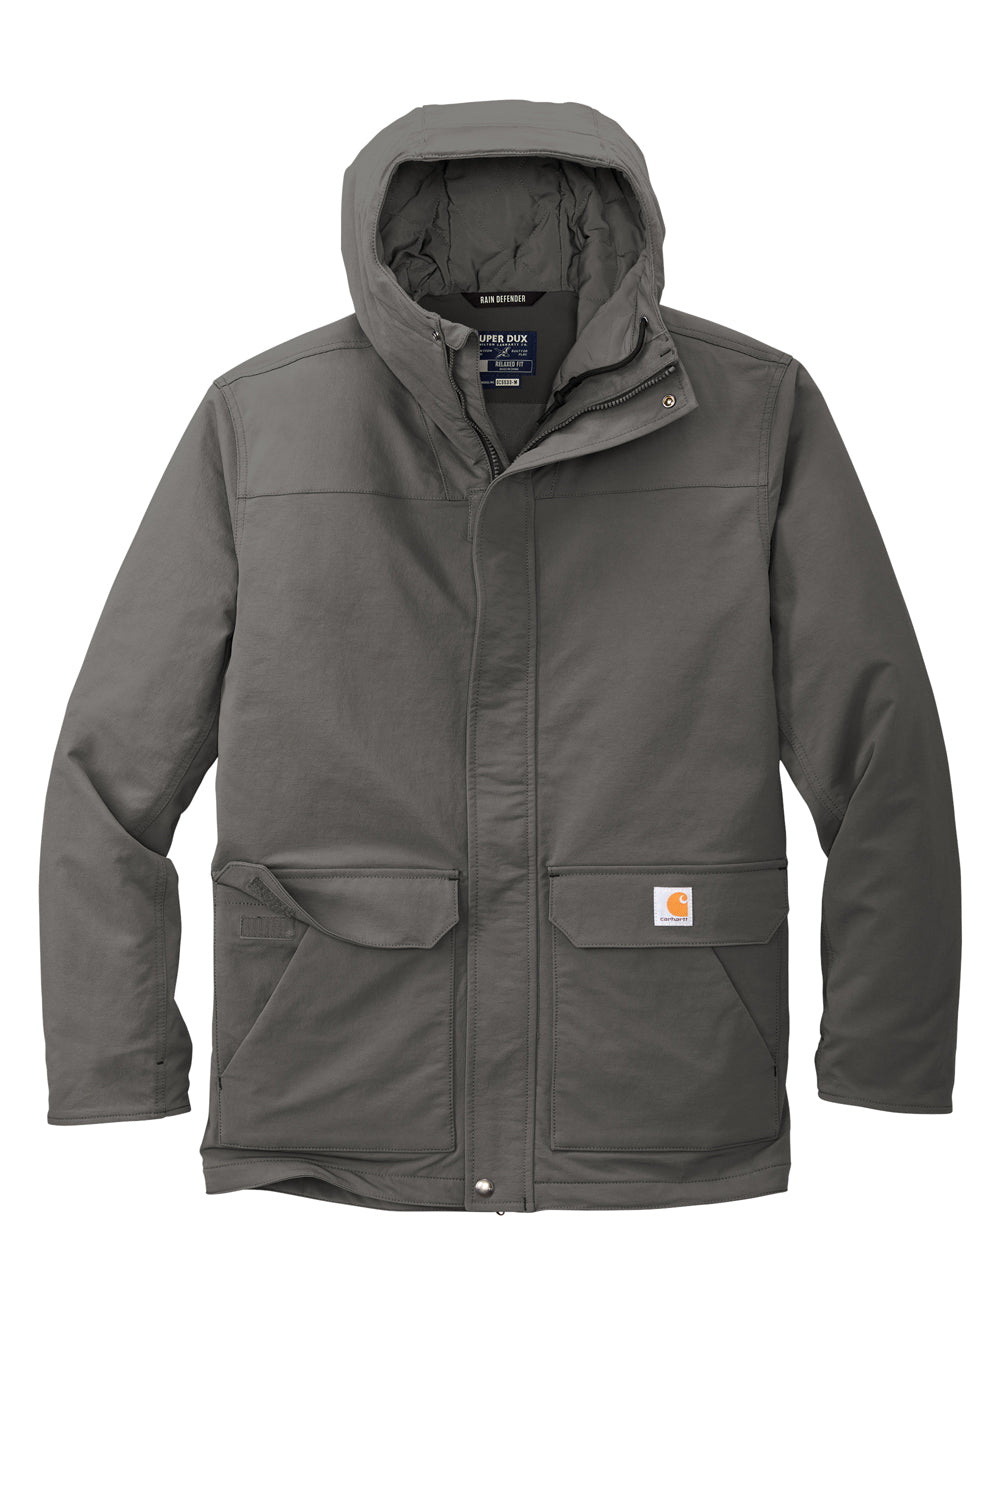 Carhartt CT105533 Mens Super Dux Wind & Water Resistant Full Zip Hooded Jacket Gravel Grey Flat Front